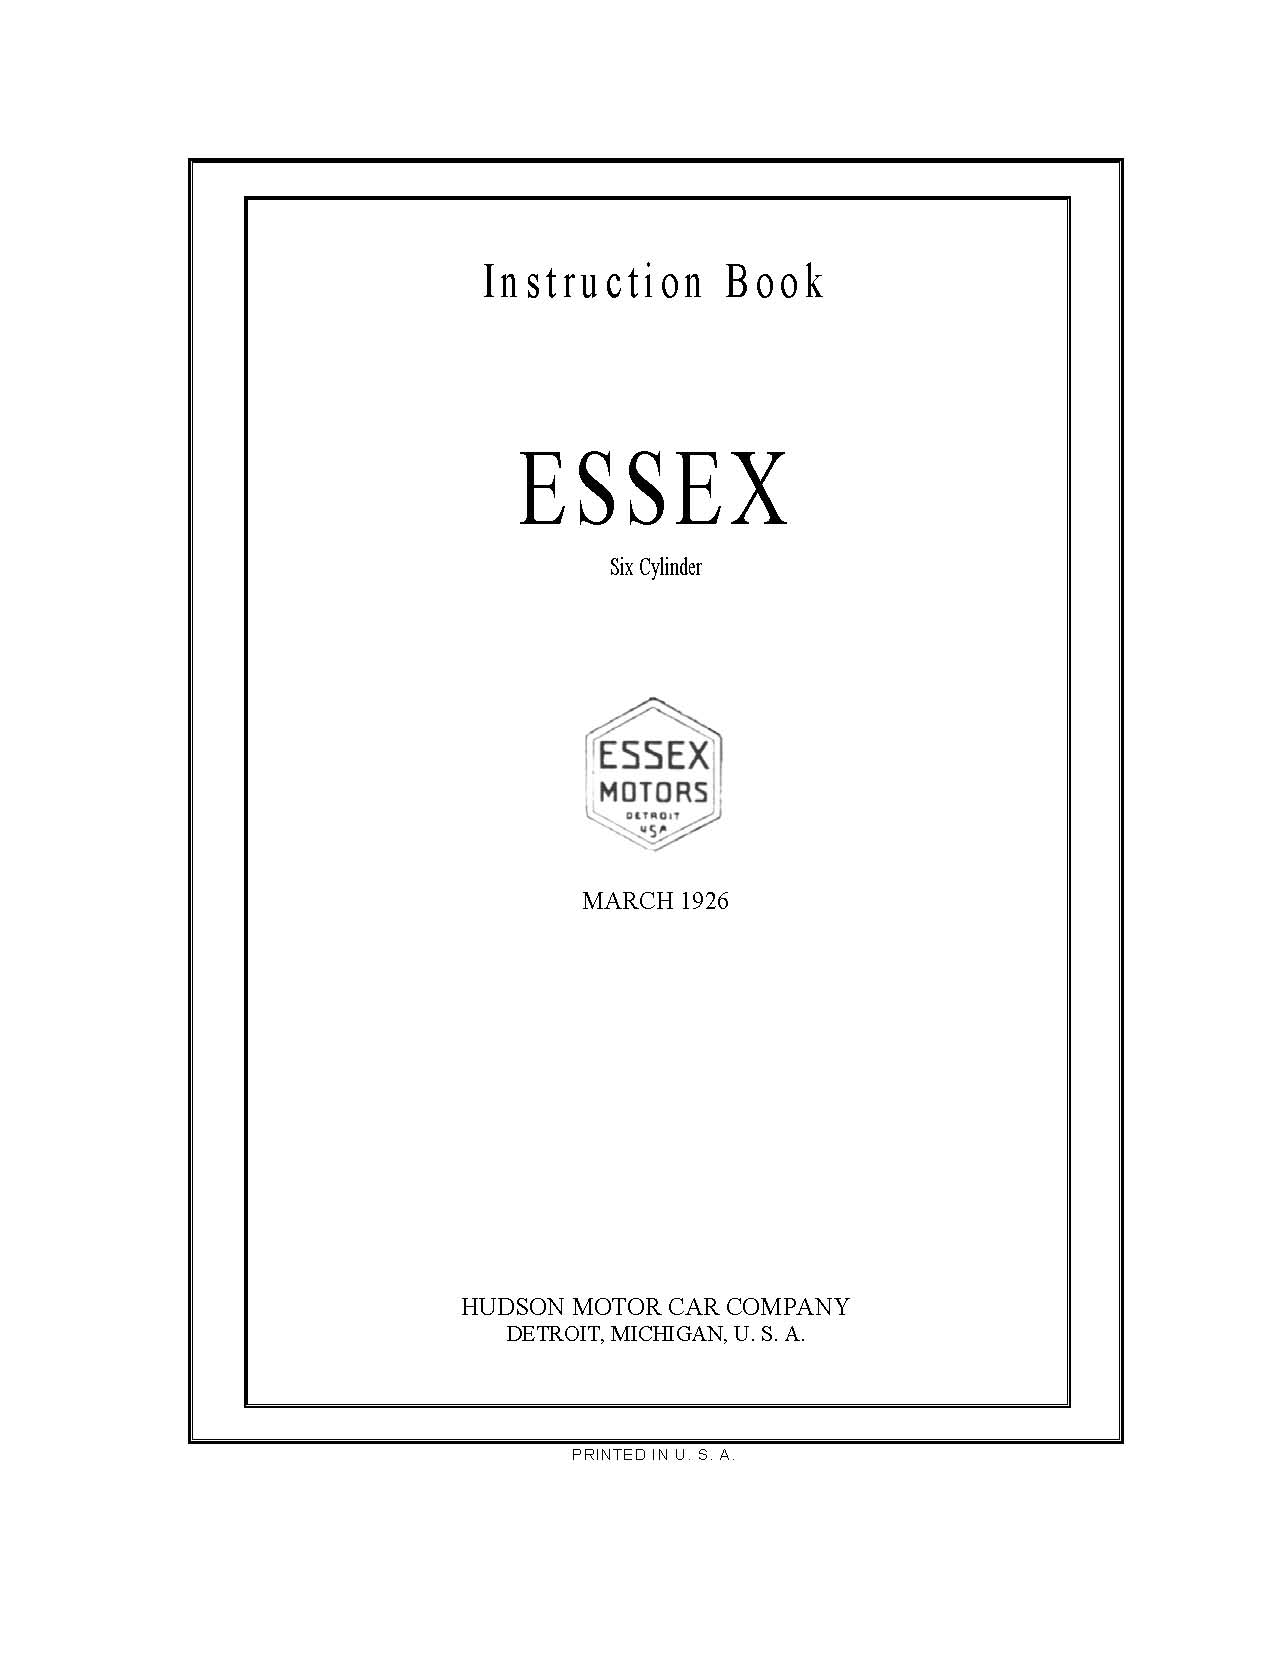 1926 Essex Automobile Instruction Manual Page 9